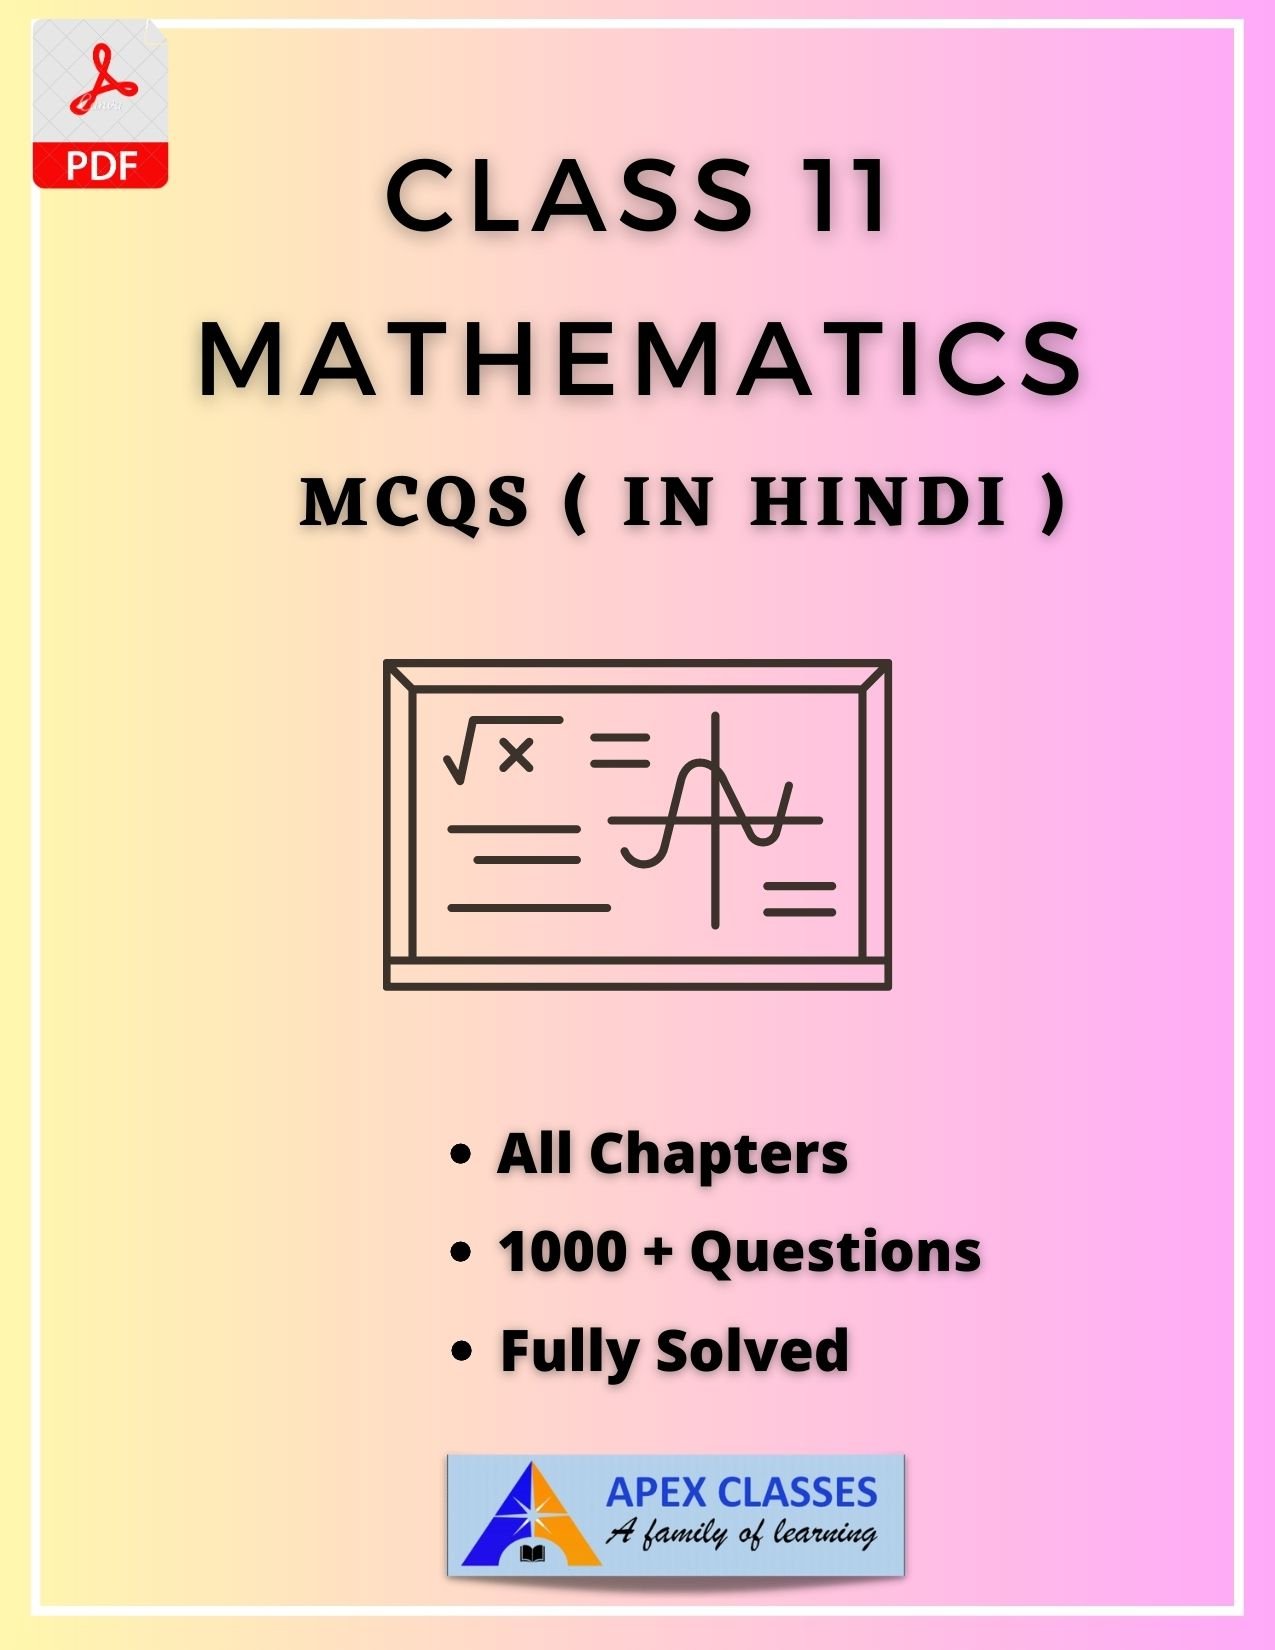 Class 11 Mathematics MCQs pdf in Hindi